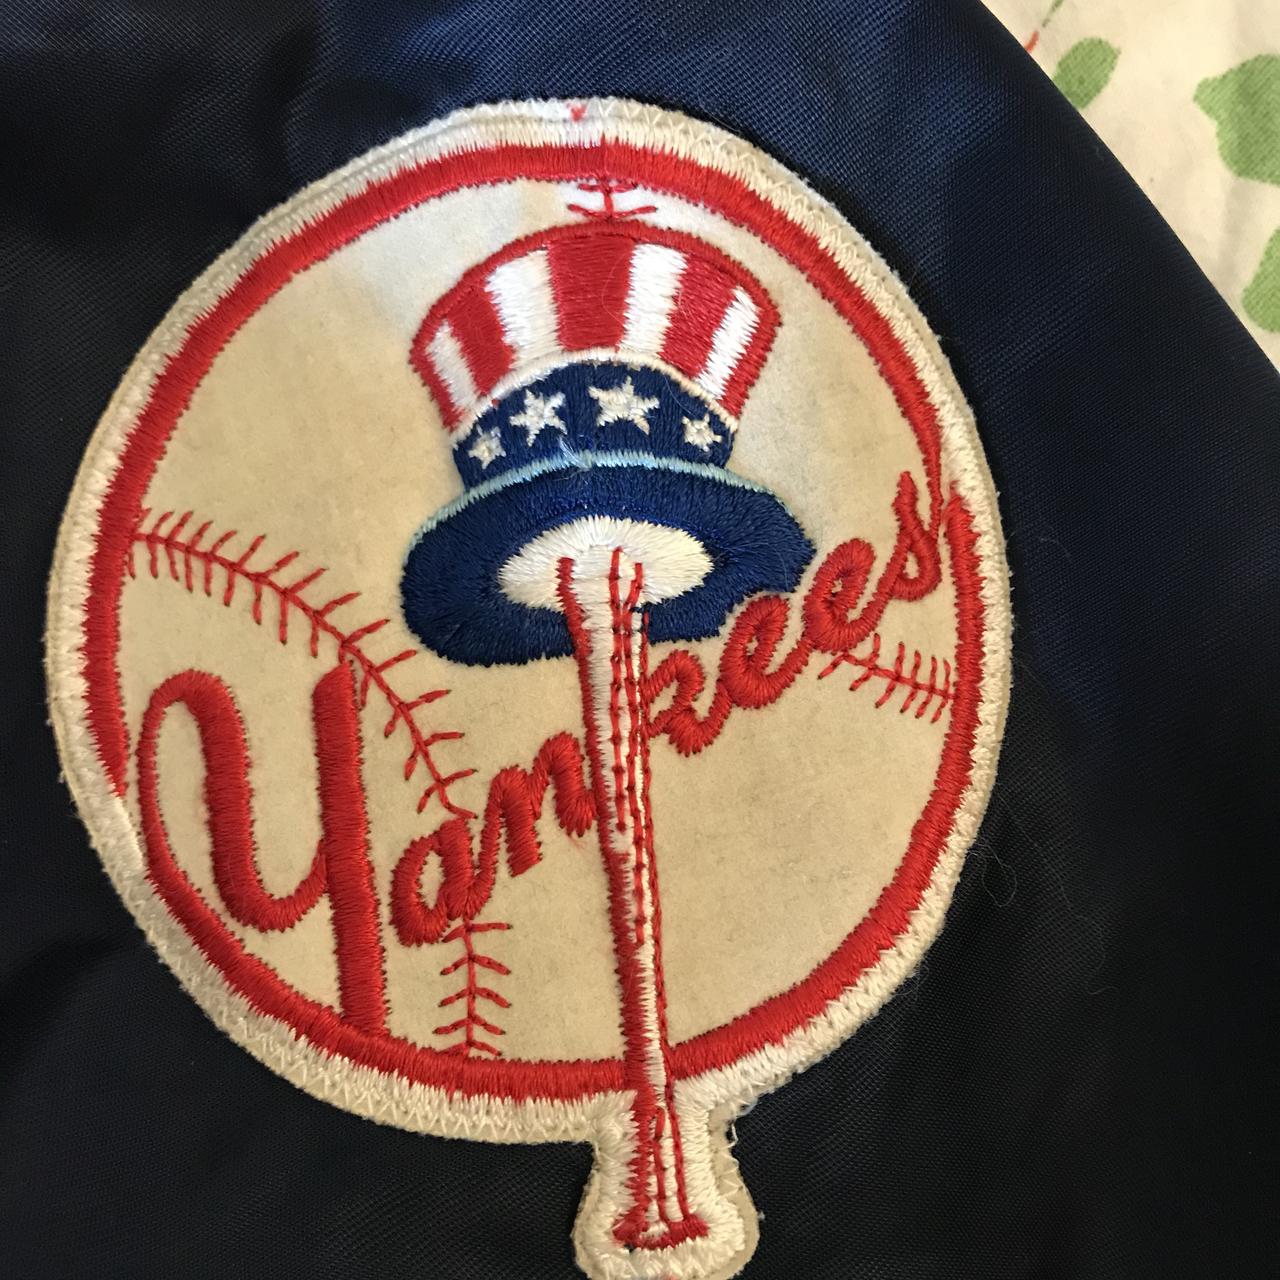 Mitchell & Ness NY Yankees Wool Jacket NWT Size 54 - Depop